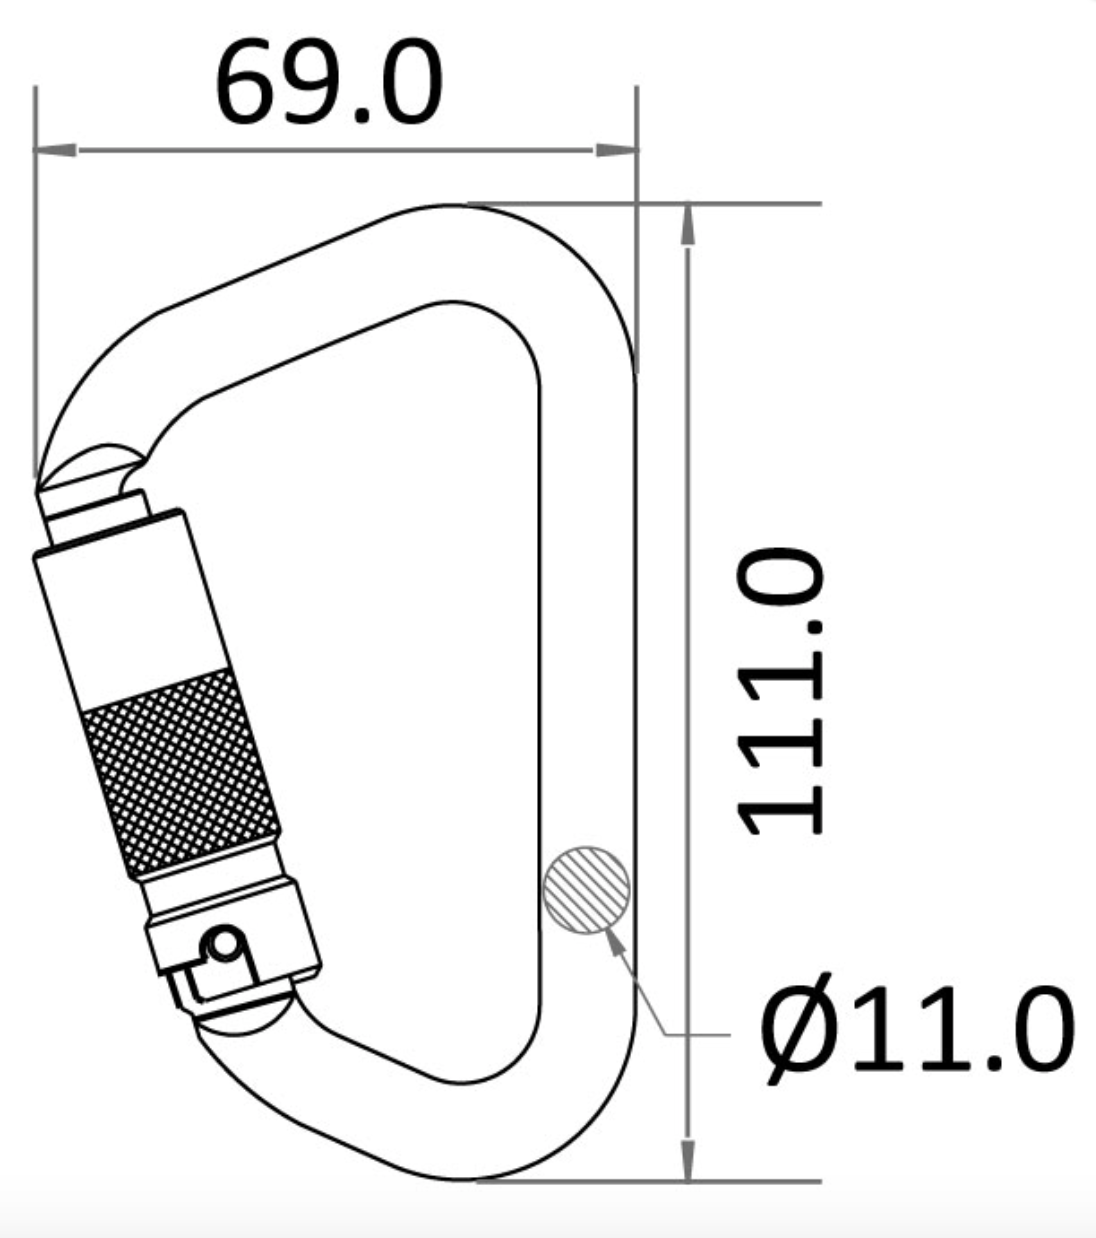 Dimensions for Aluminium Triple Action Locking Keylock Karabiner